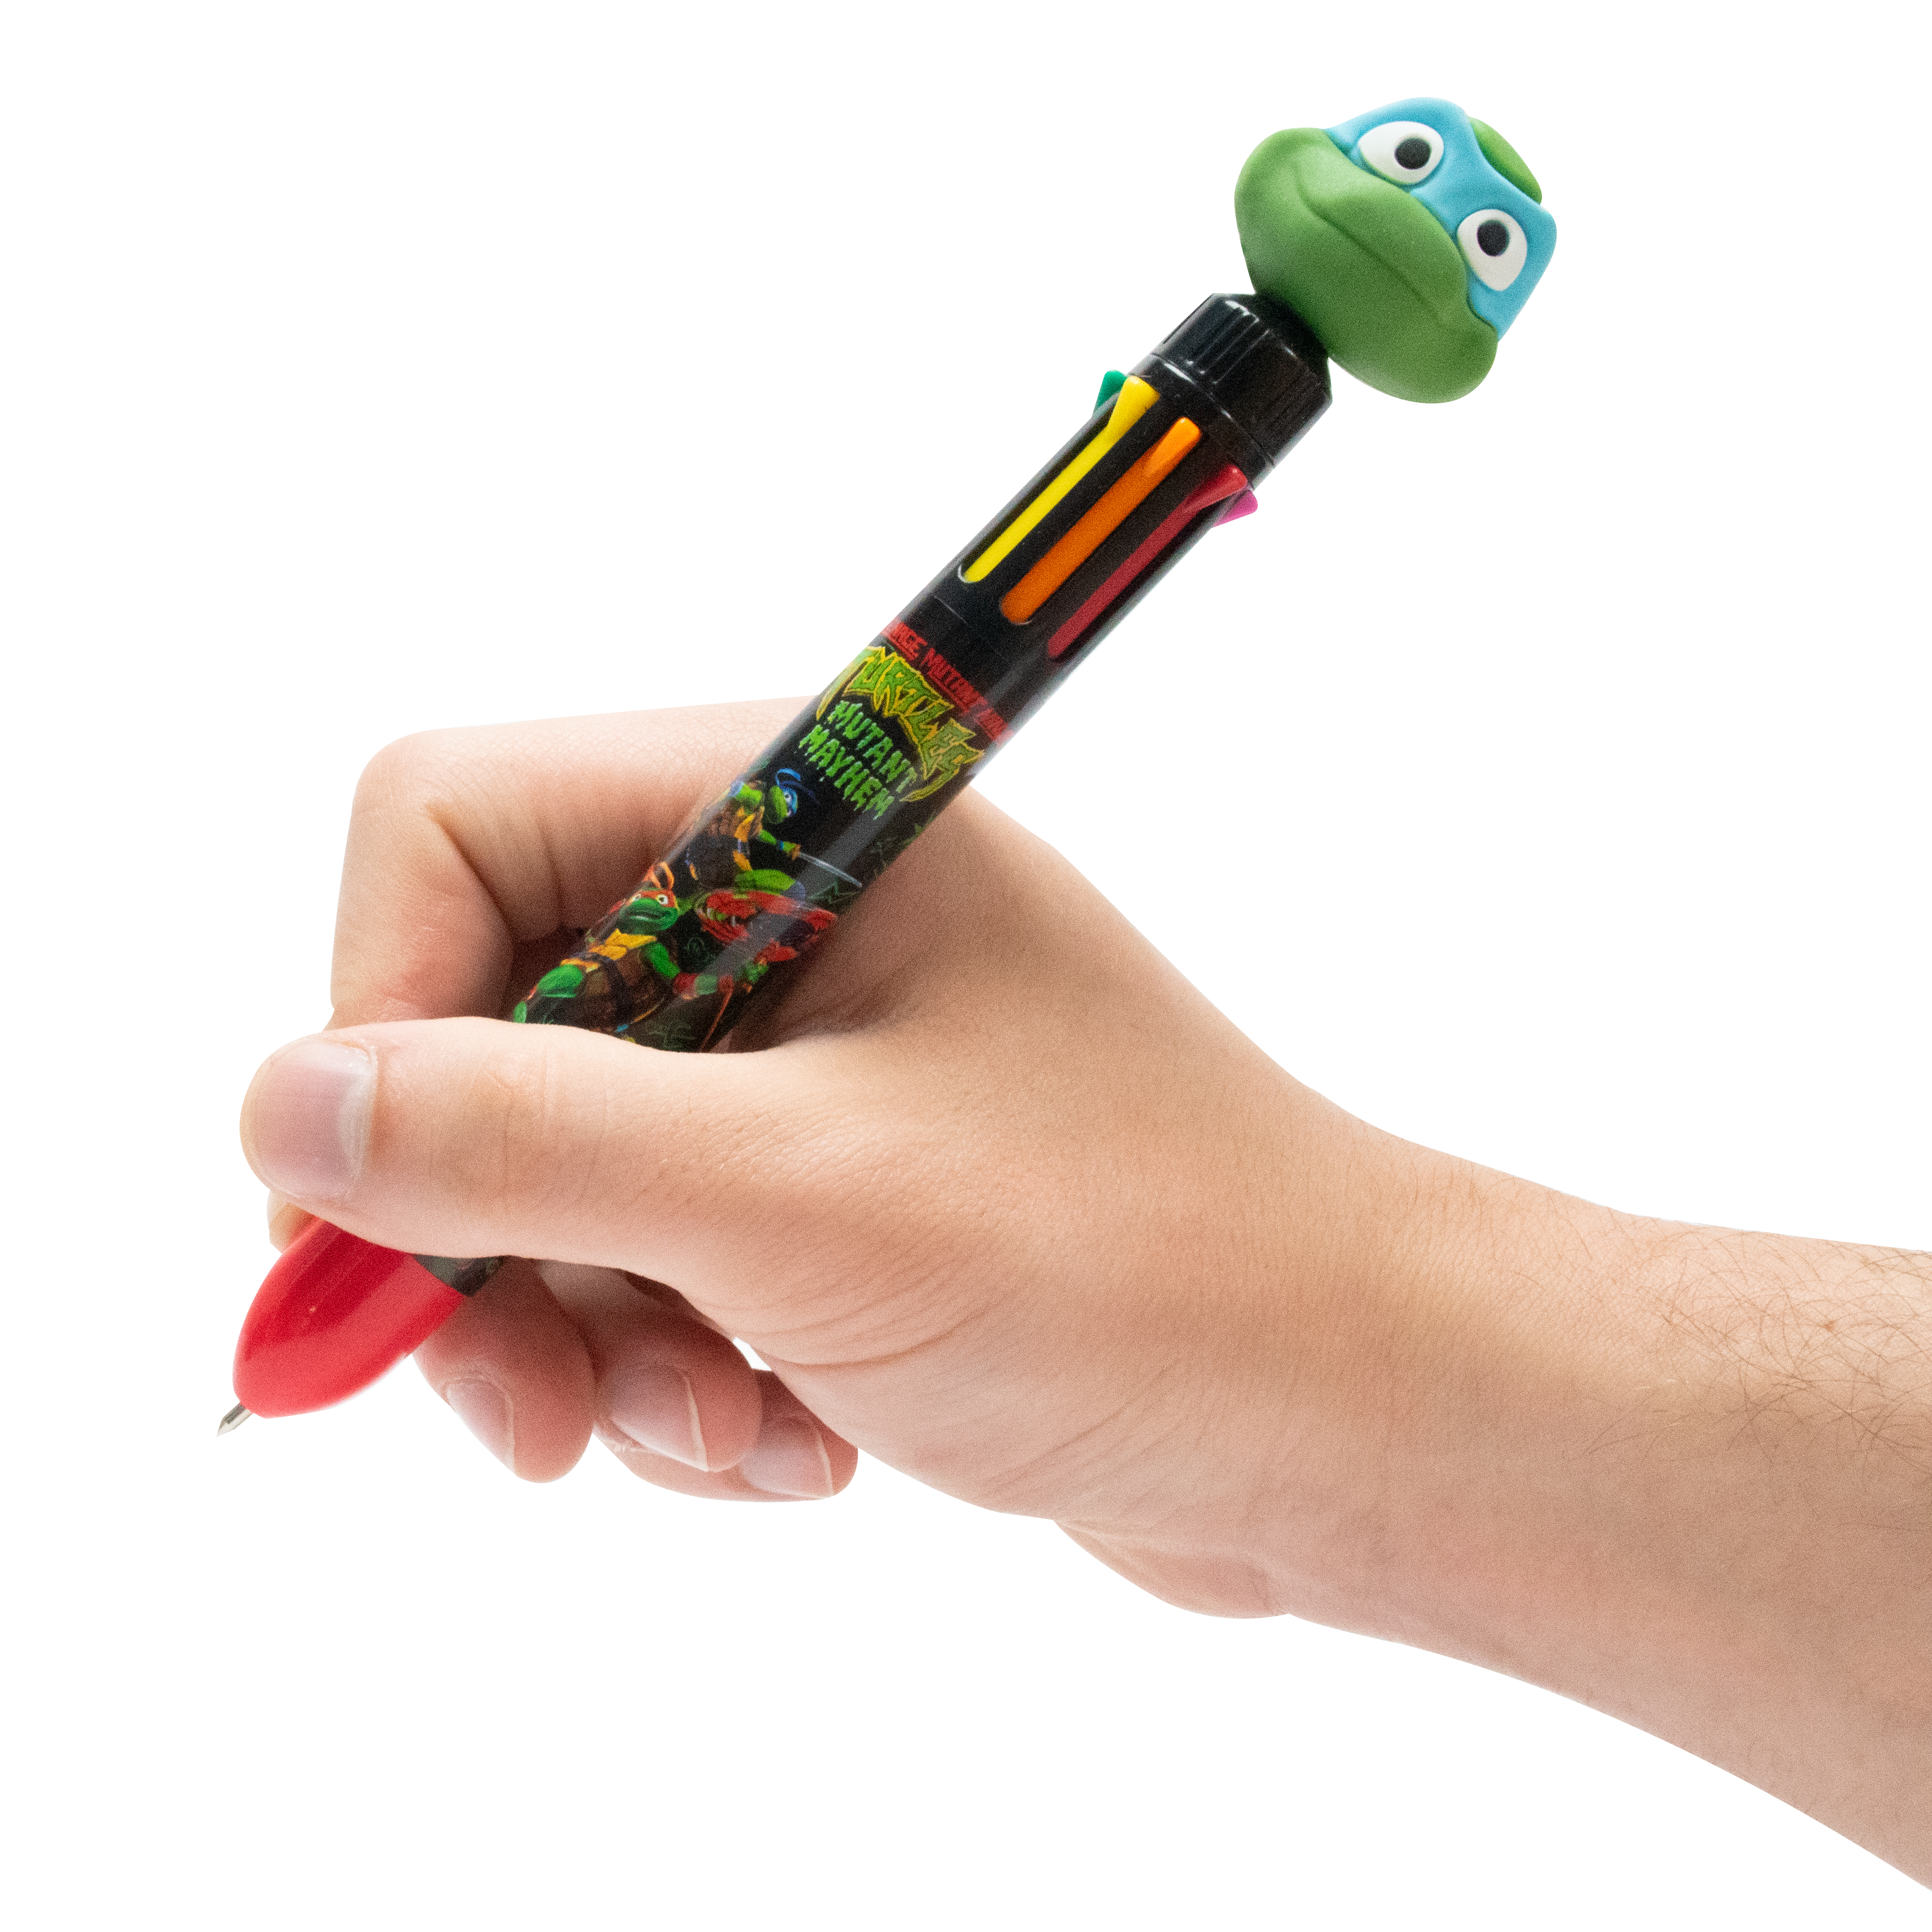 TMNT - Stift "Leonardo" 8 in 1 (mehrfarbig)